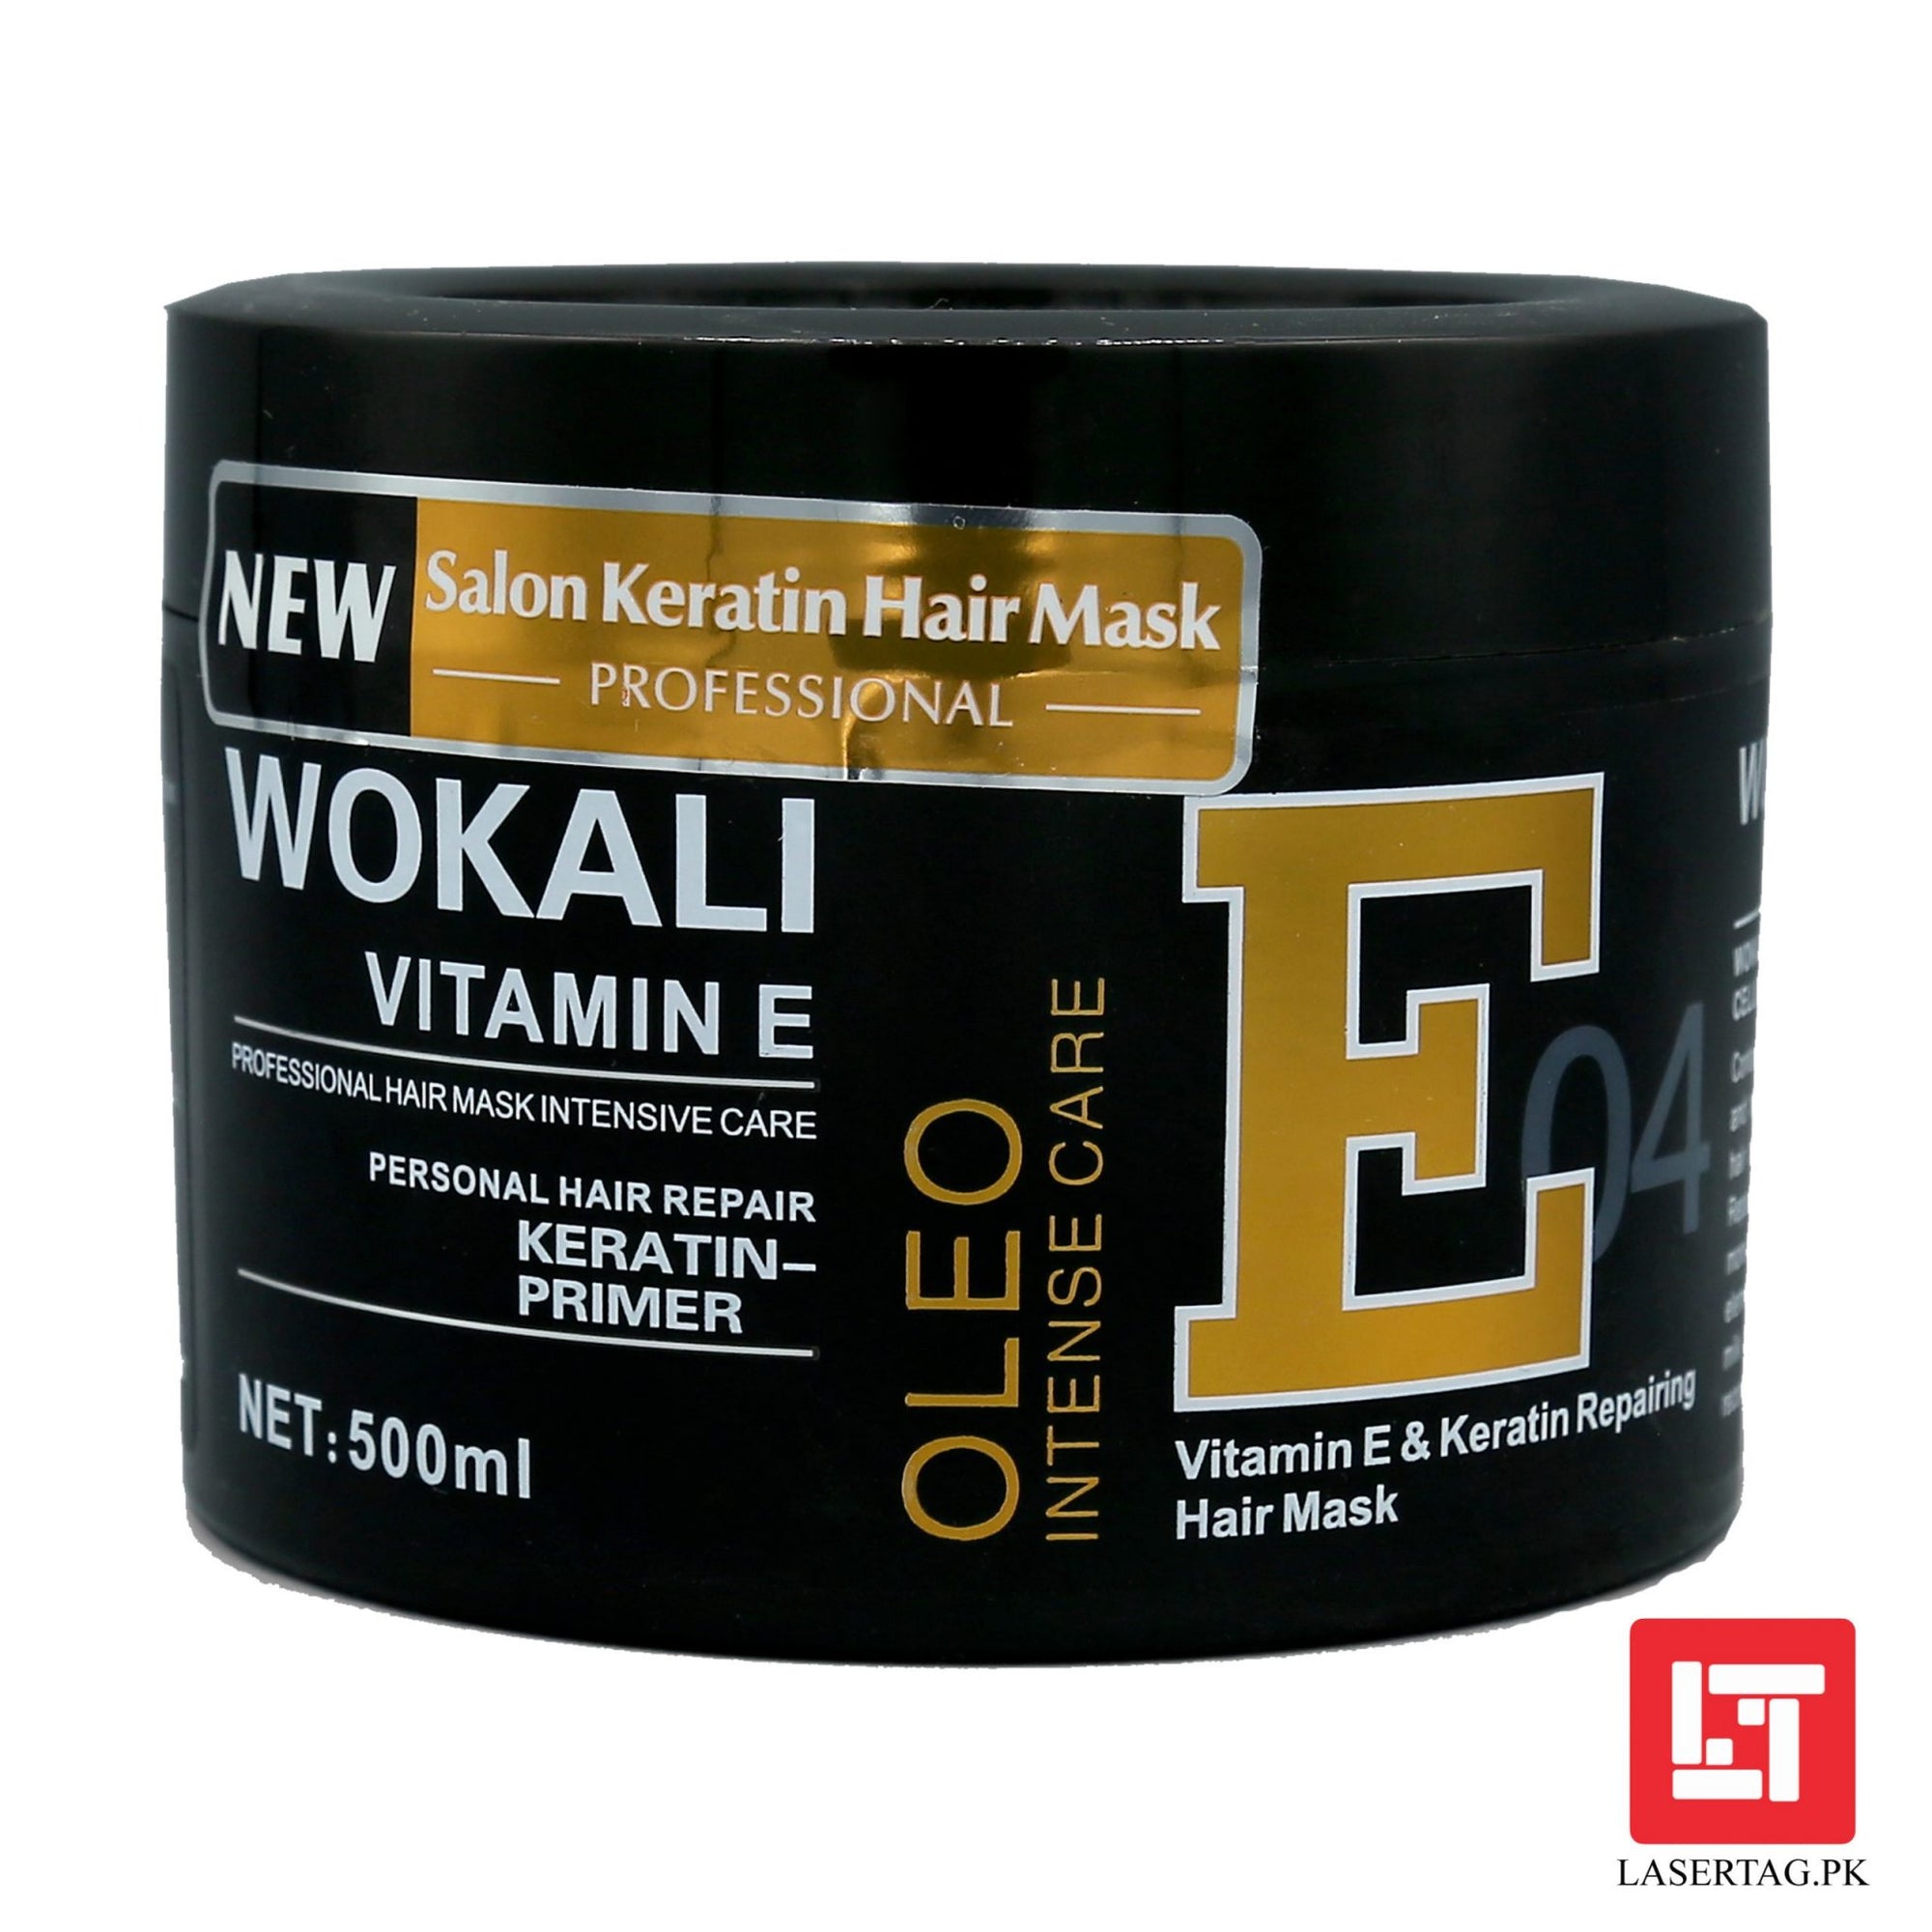 Wokali Hair Mask Vitamin E Oleo Intense Care Keratin Primer Golden 500g freeshipping - lasertag.pk